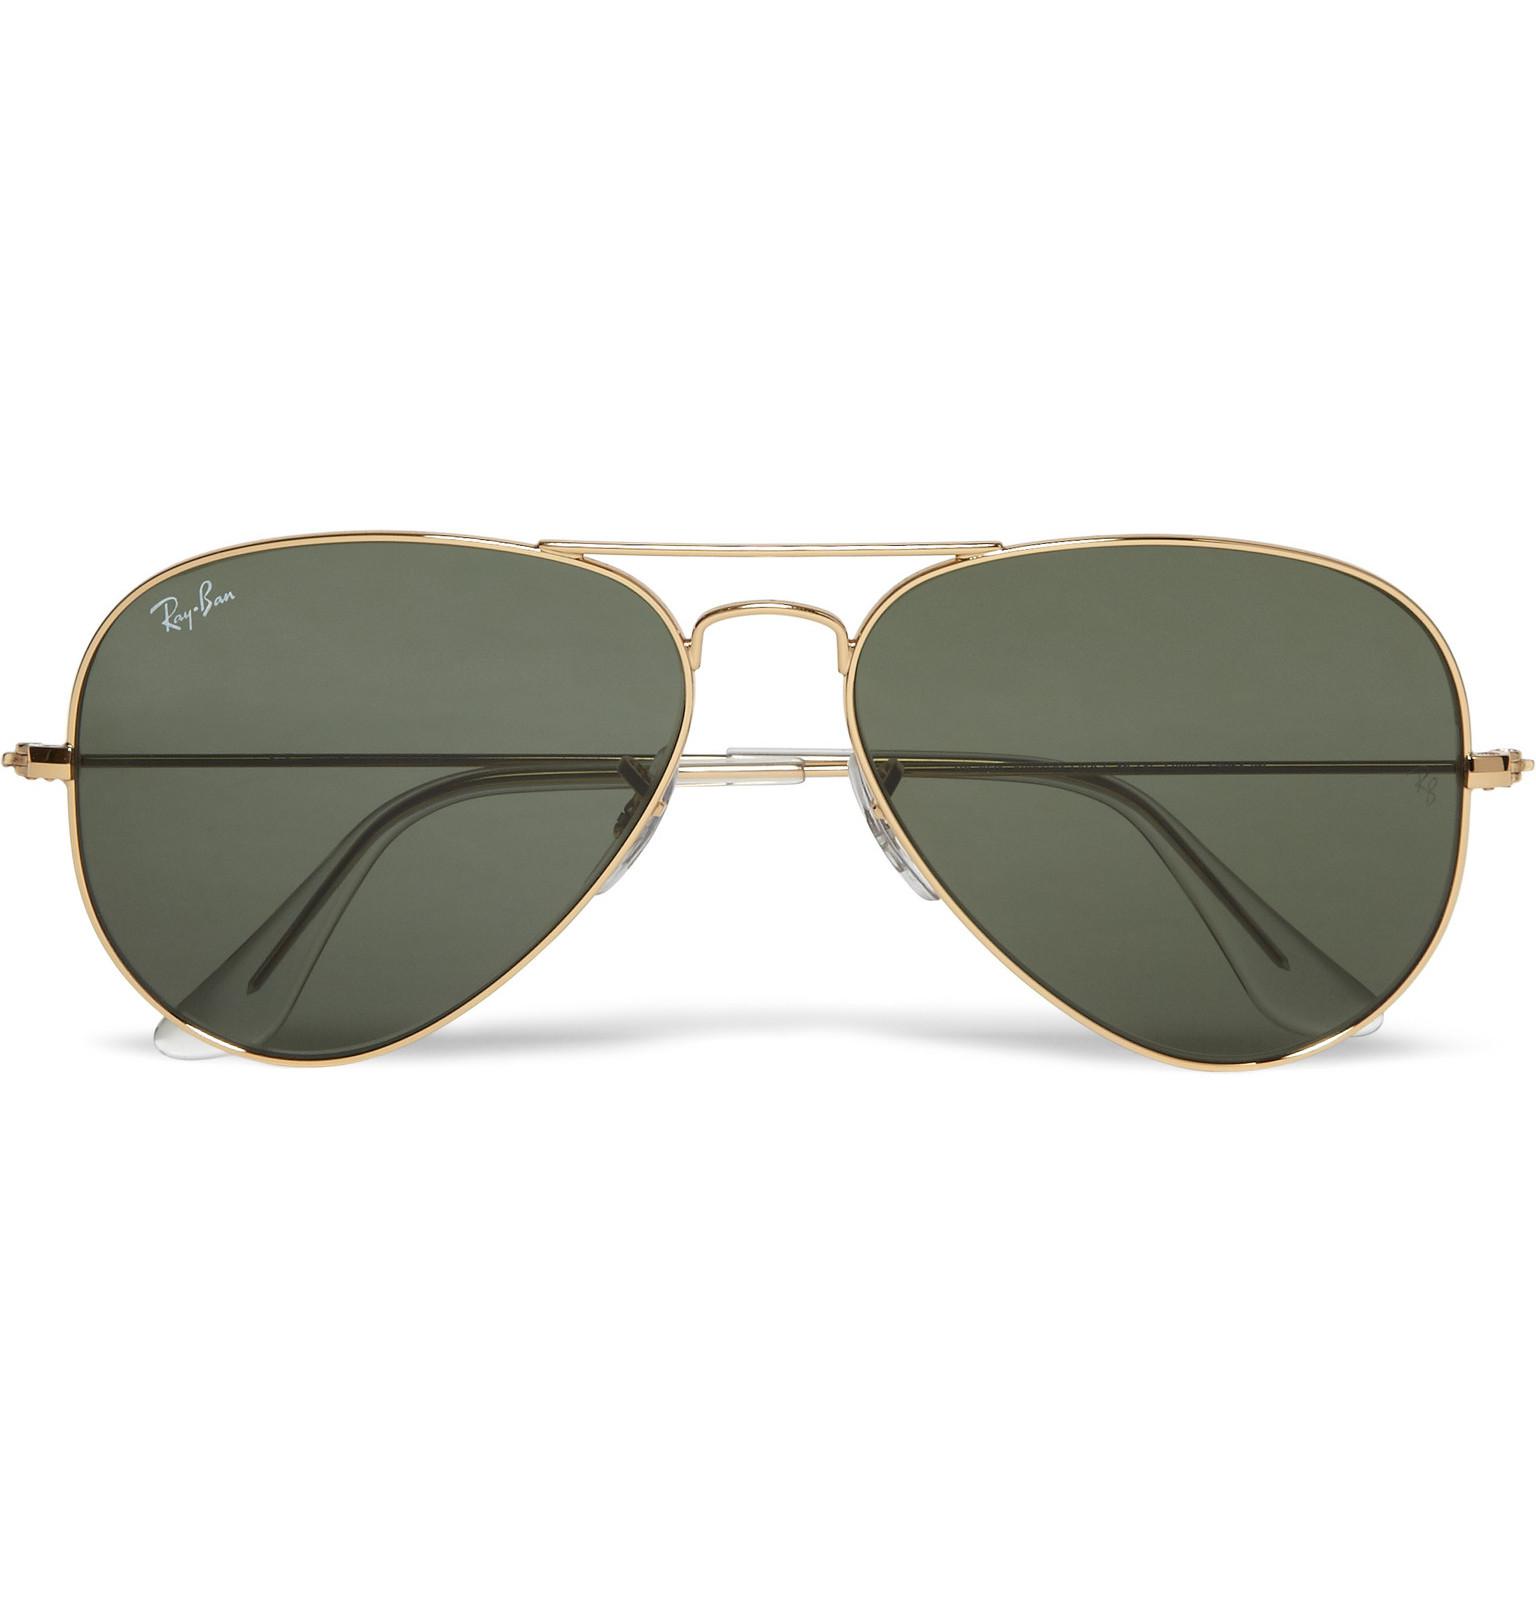 Ray-Ban Aviator Gold-tone Sunglasses in Metallic for Men - Lyst